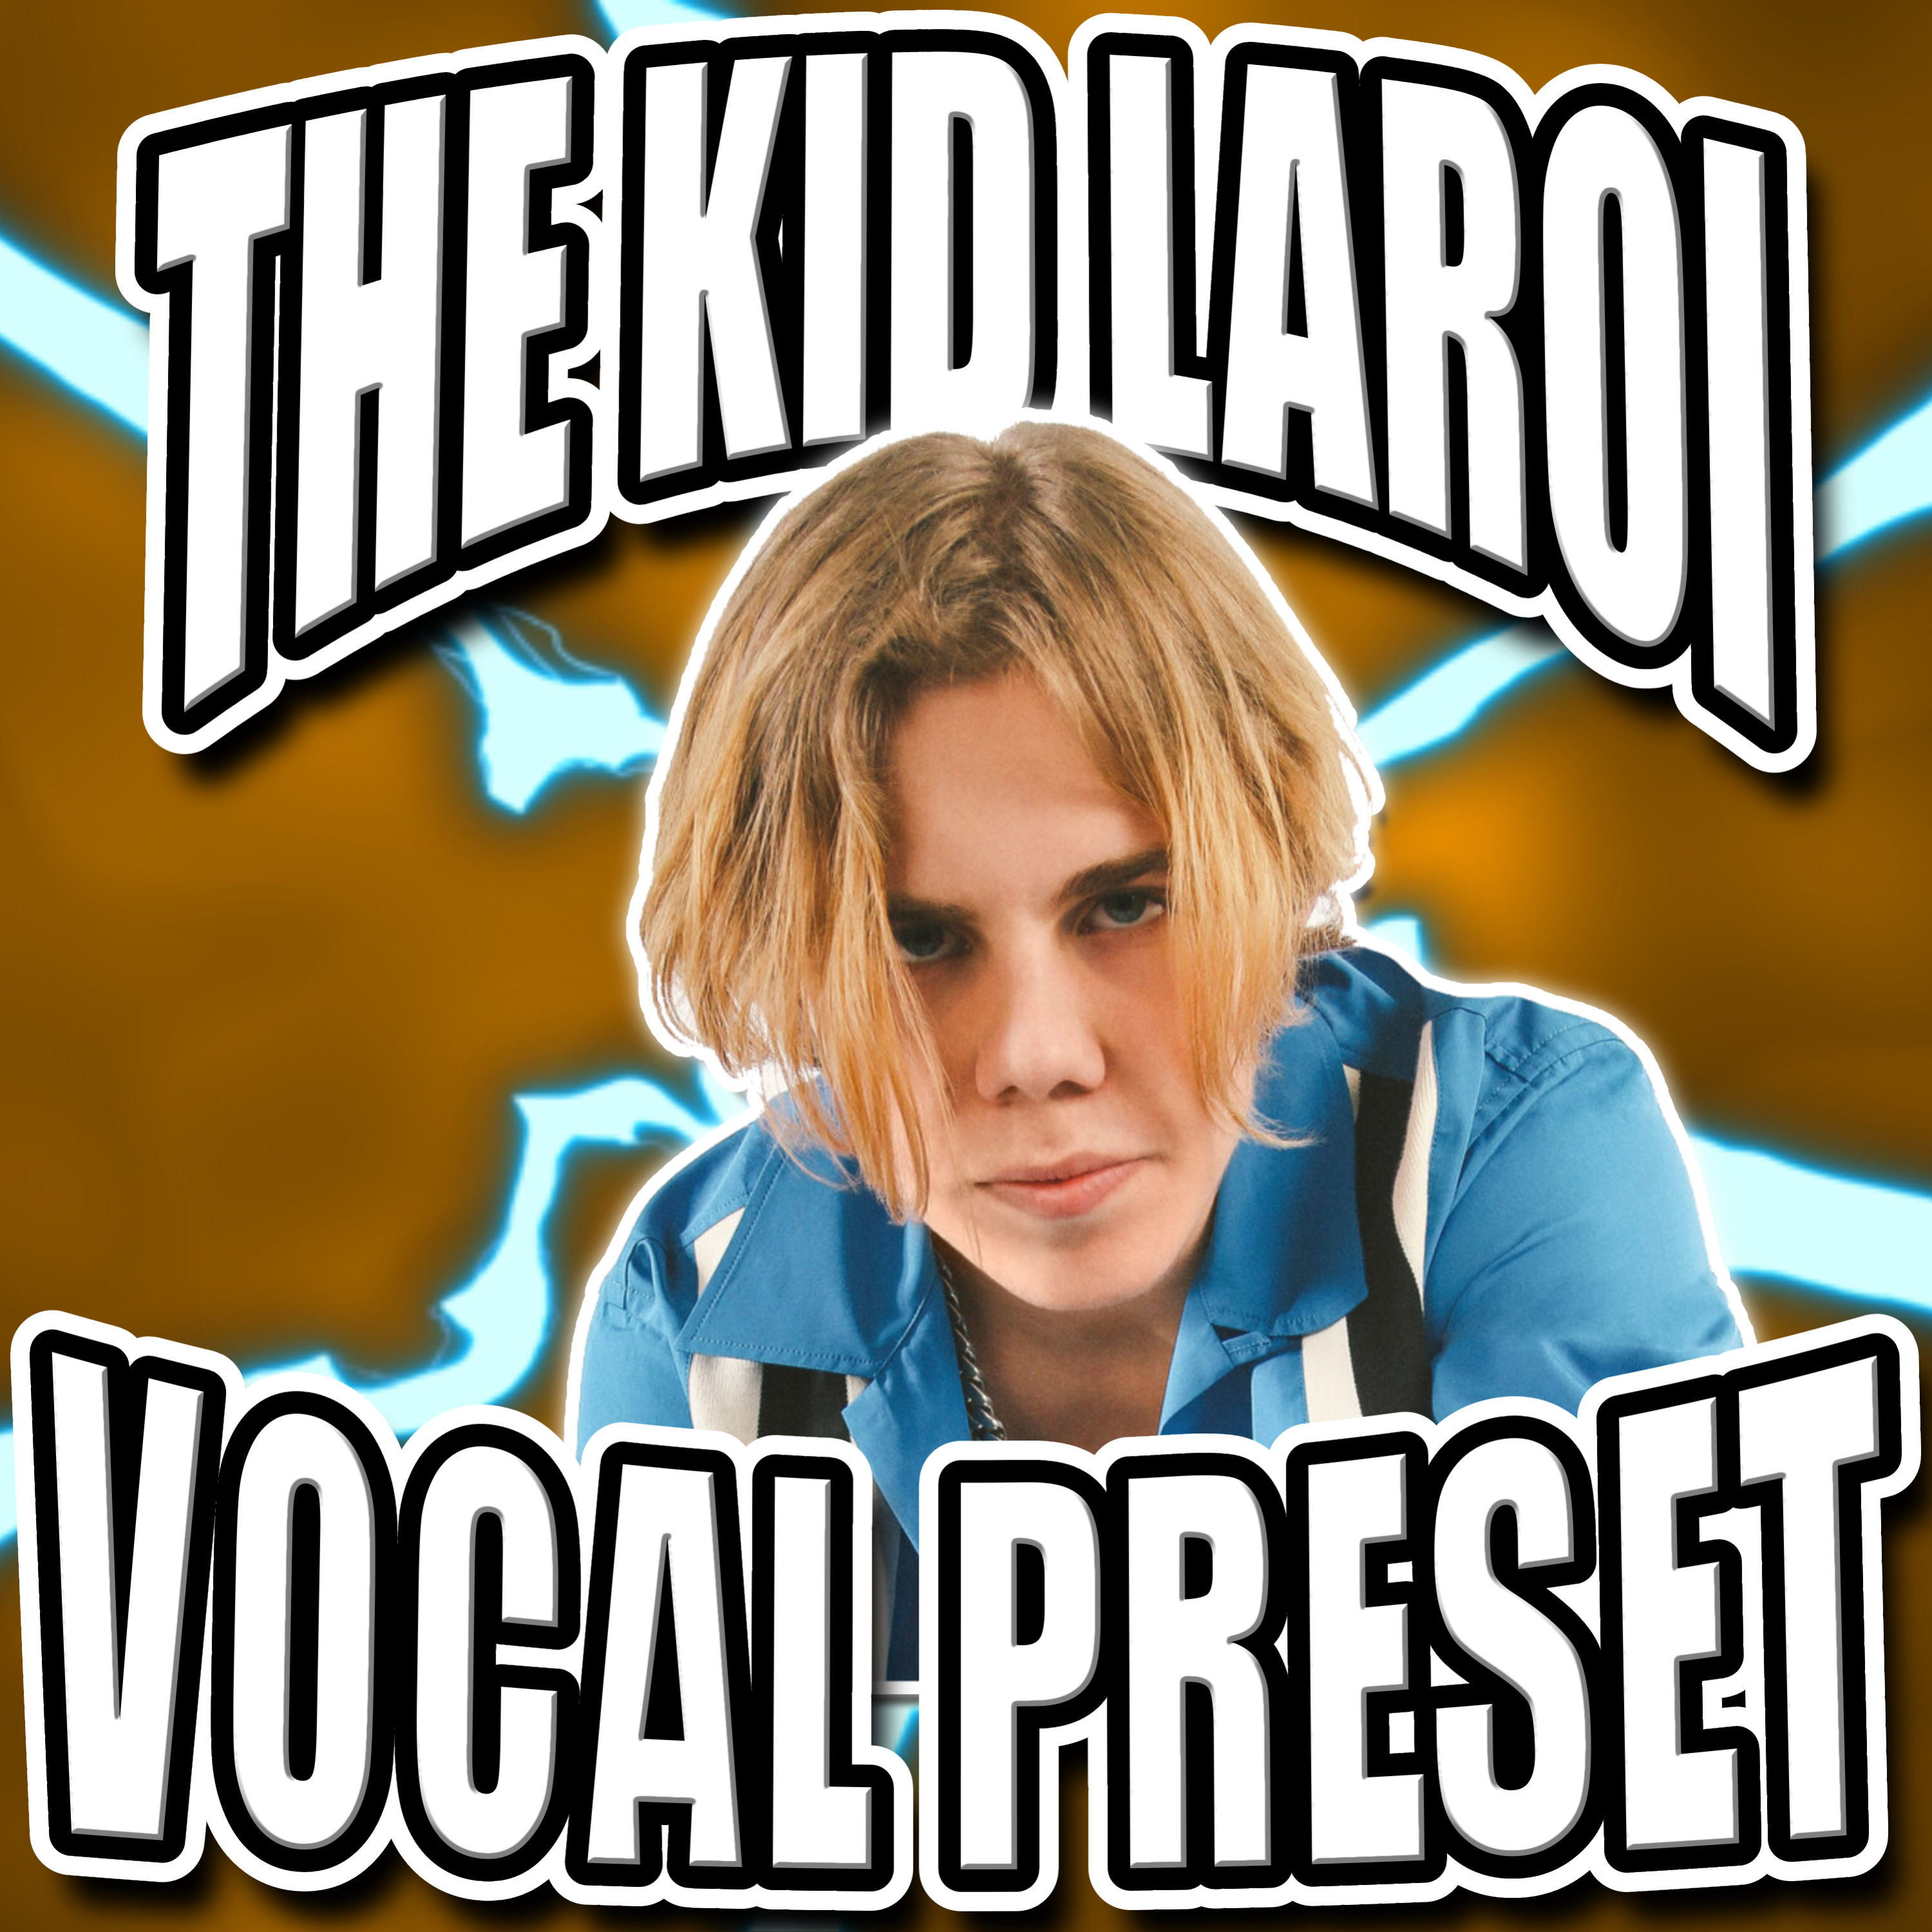 The Kid Laroi Vocal Preset